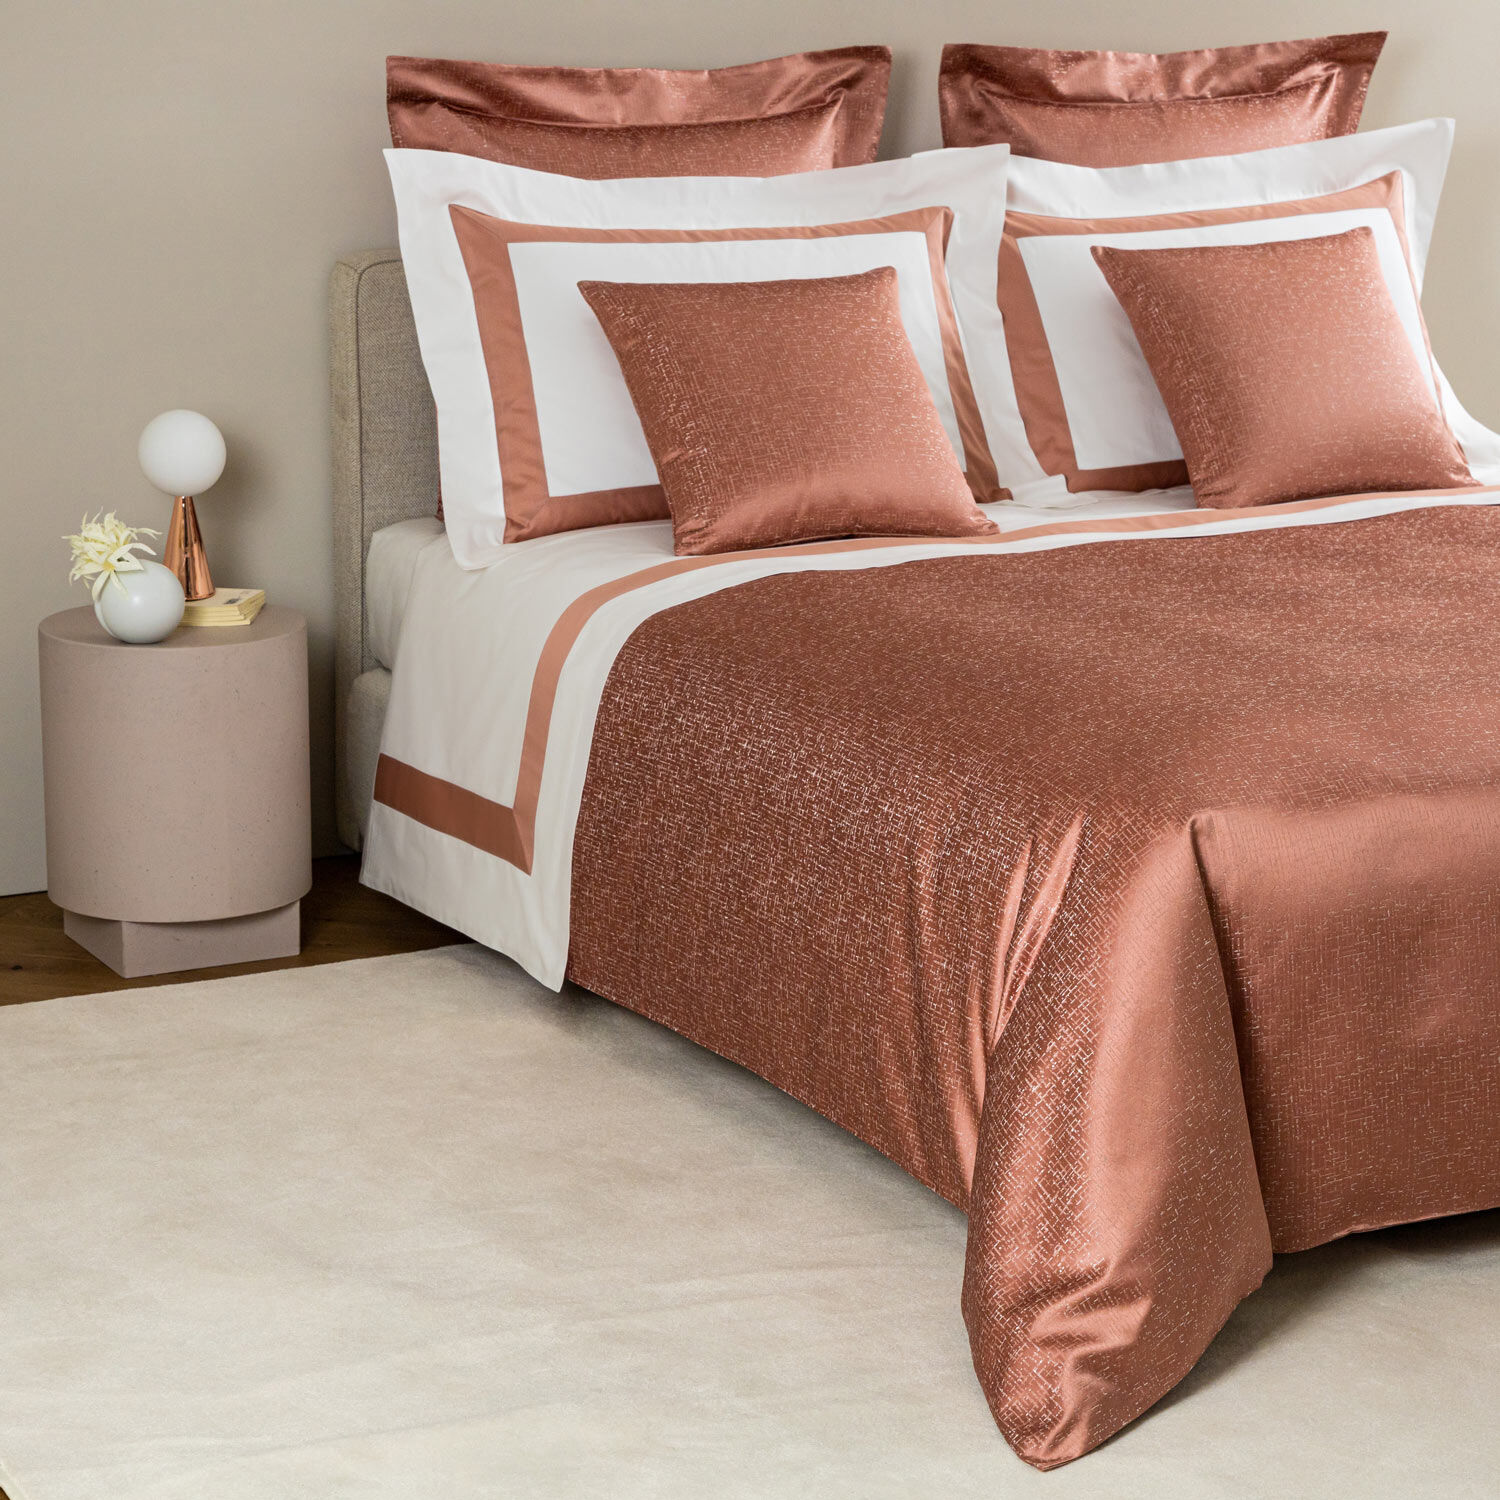 Luxury Glowing Weave Decorative Pillow